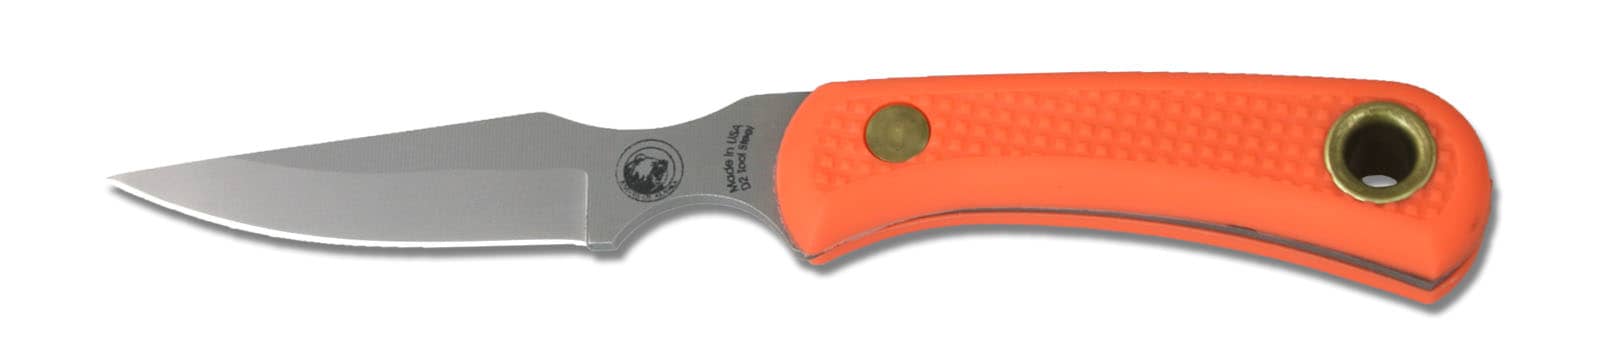 Knives Of Alaska Cub Bear Orange Suregrip Fixed Blade Knife